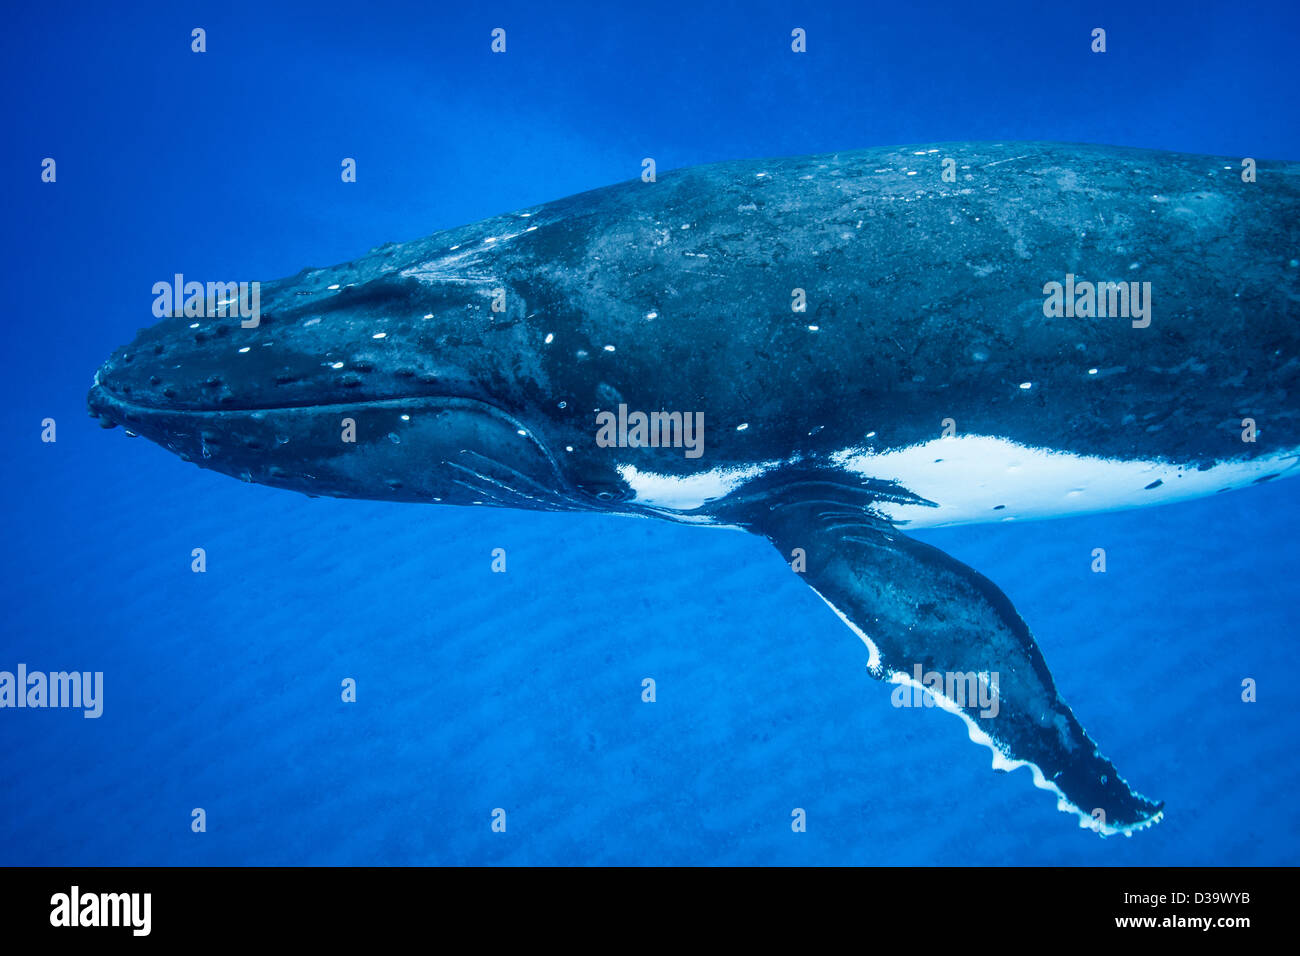 Humpback whale swimming underwater Stock Photo